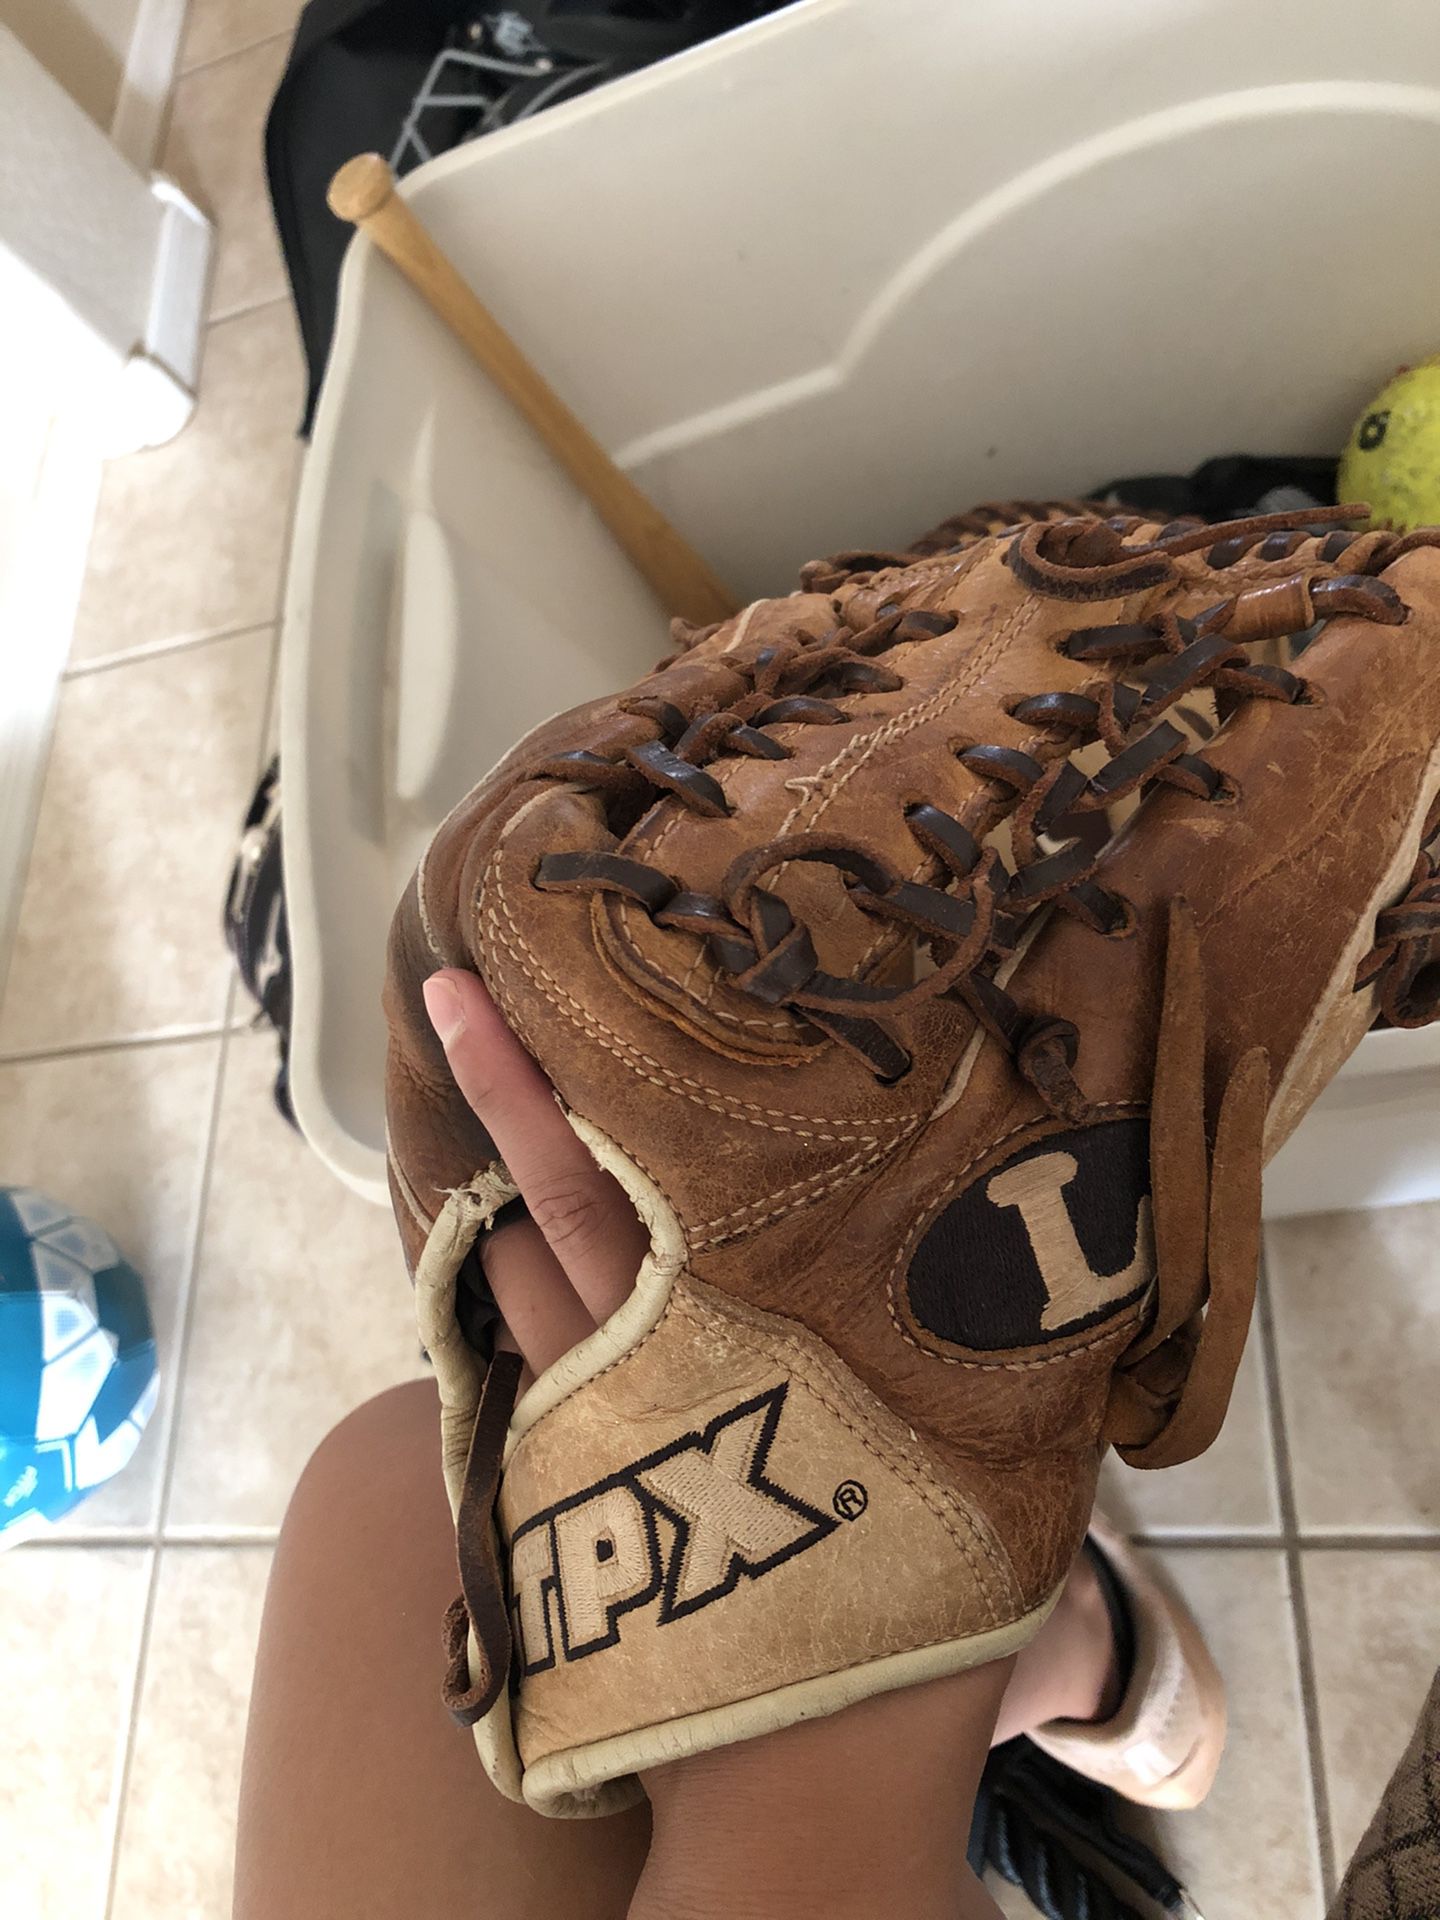 Louisville Slugger Omaha fielding glove. Baseball/Softball